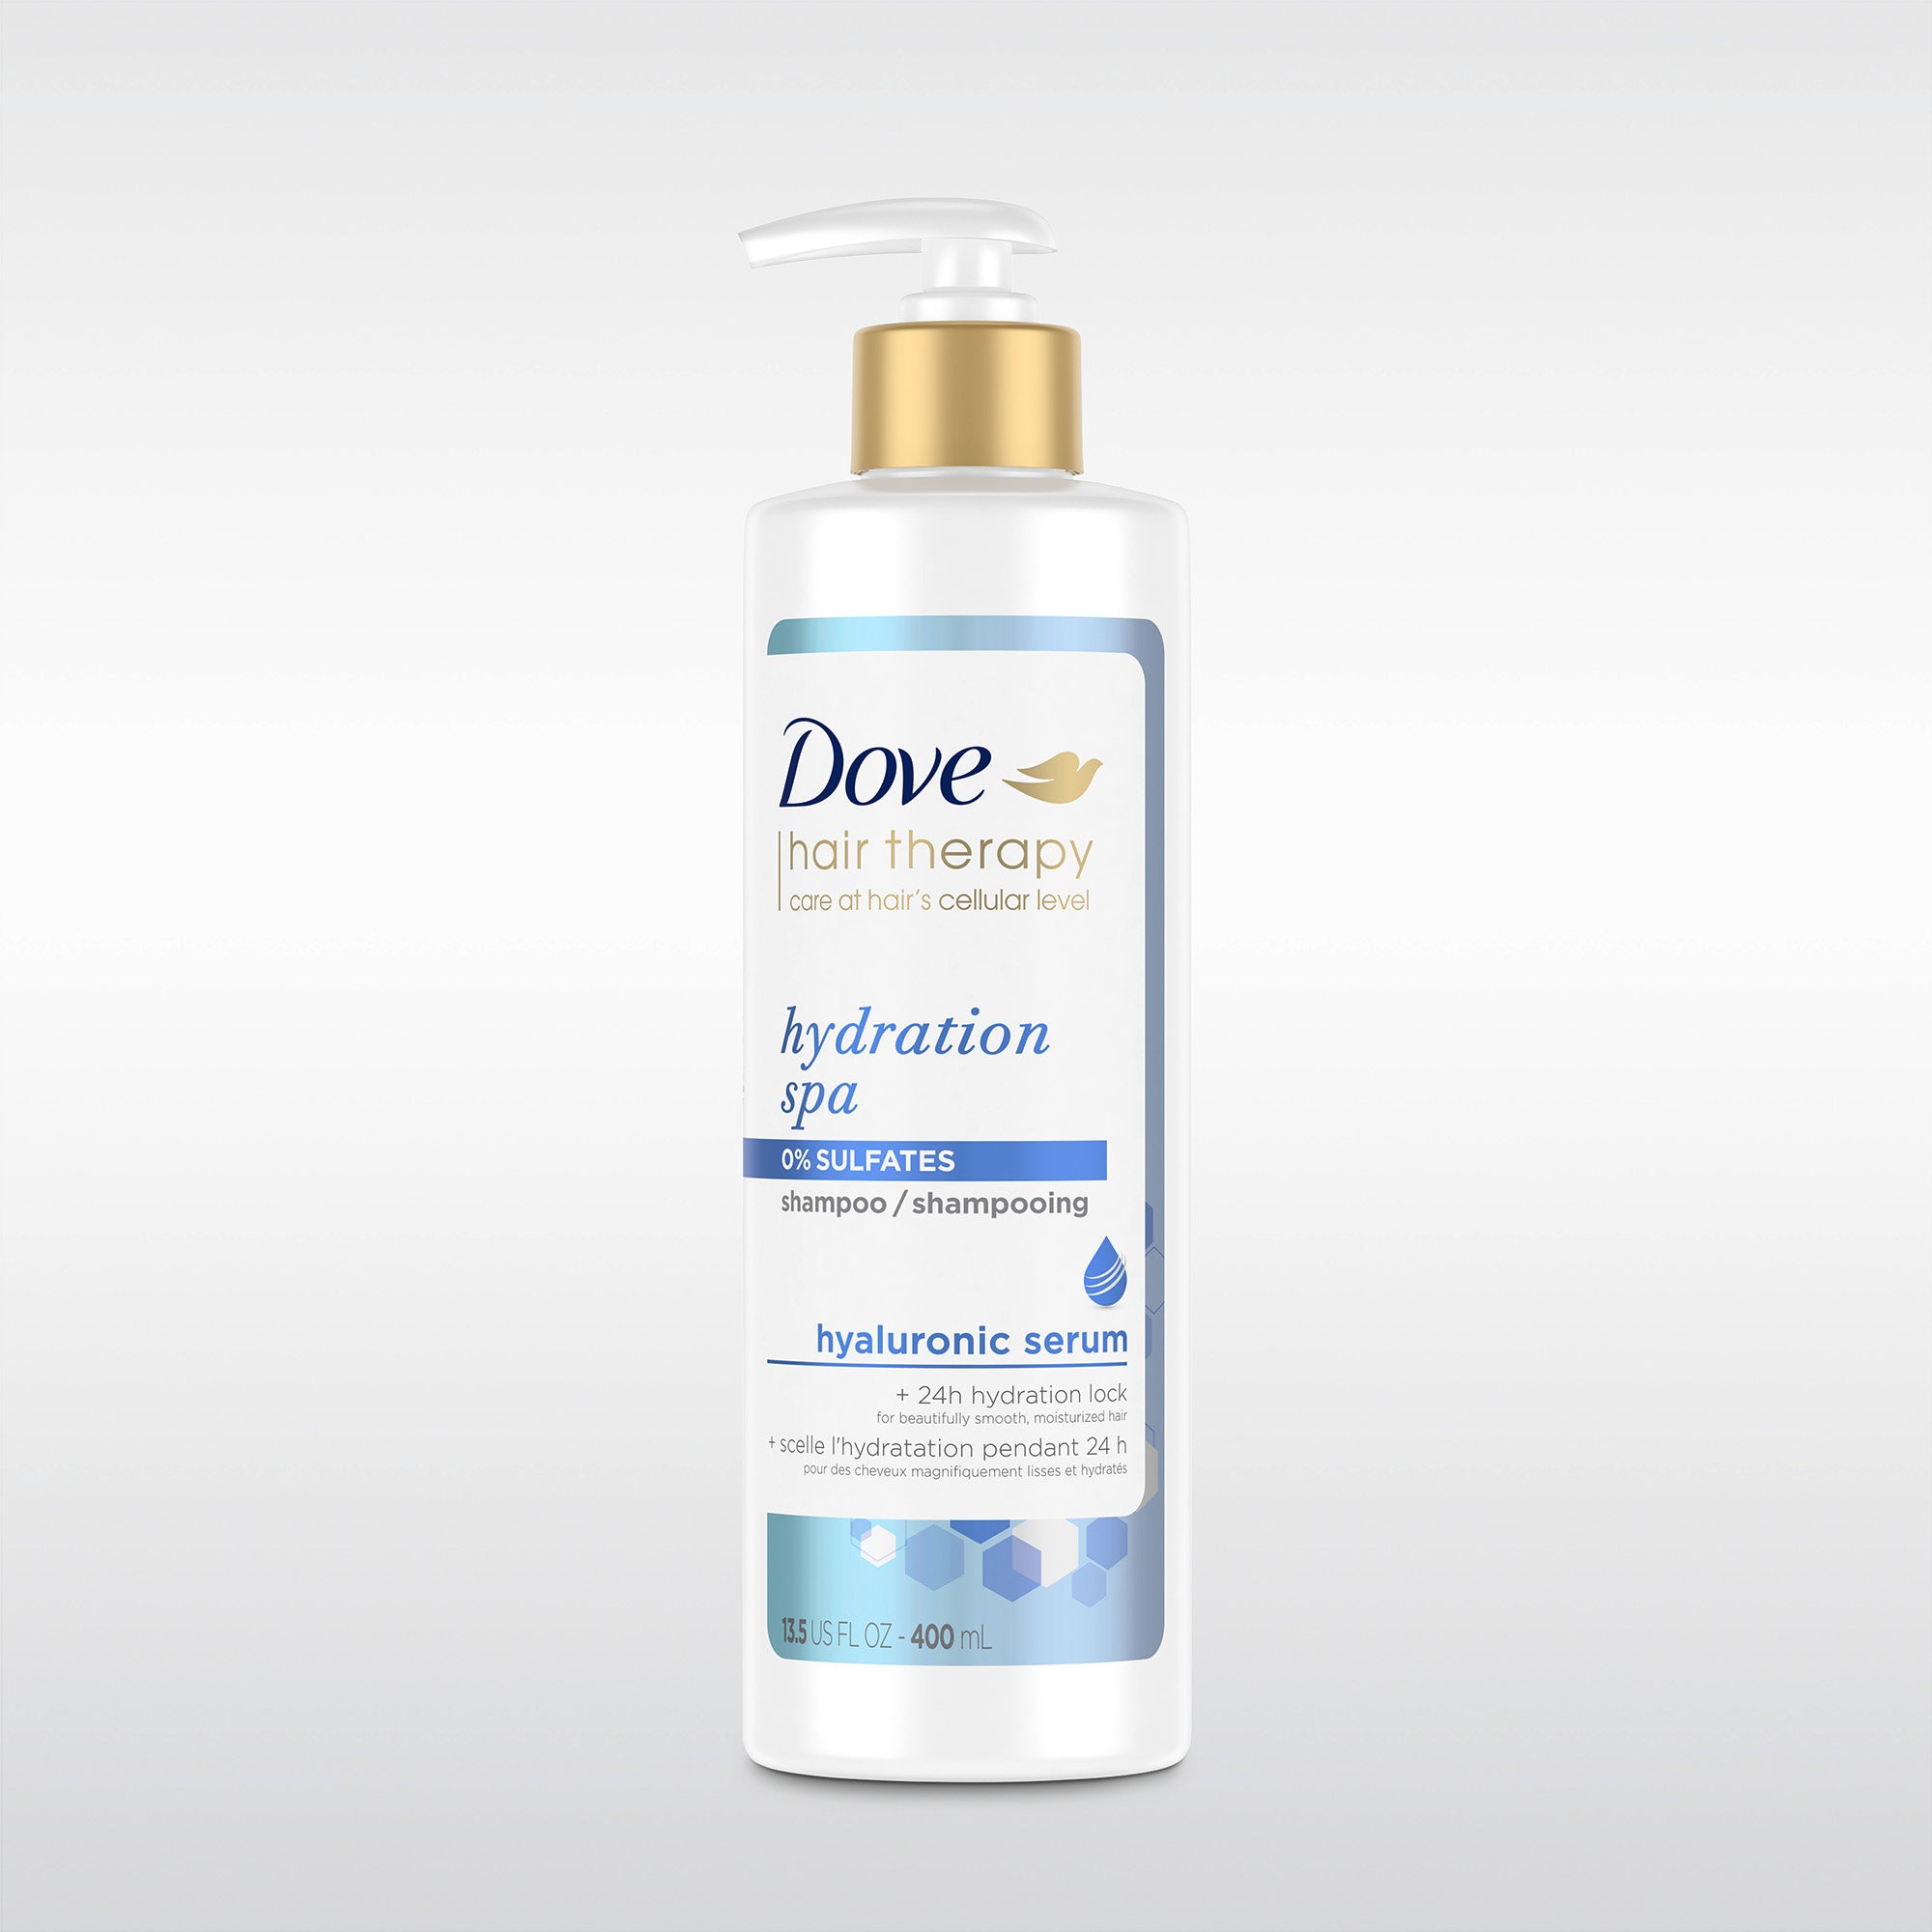 Dove hair therapy hydration spa shampoo